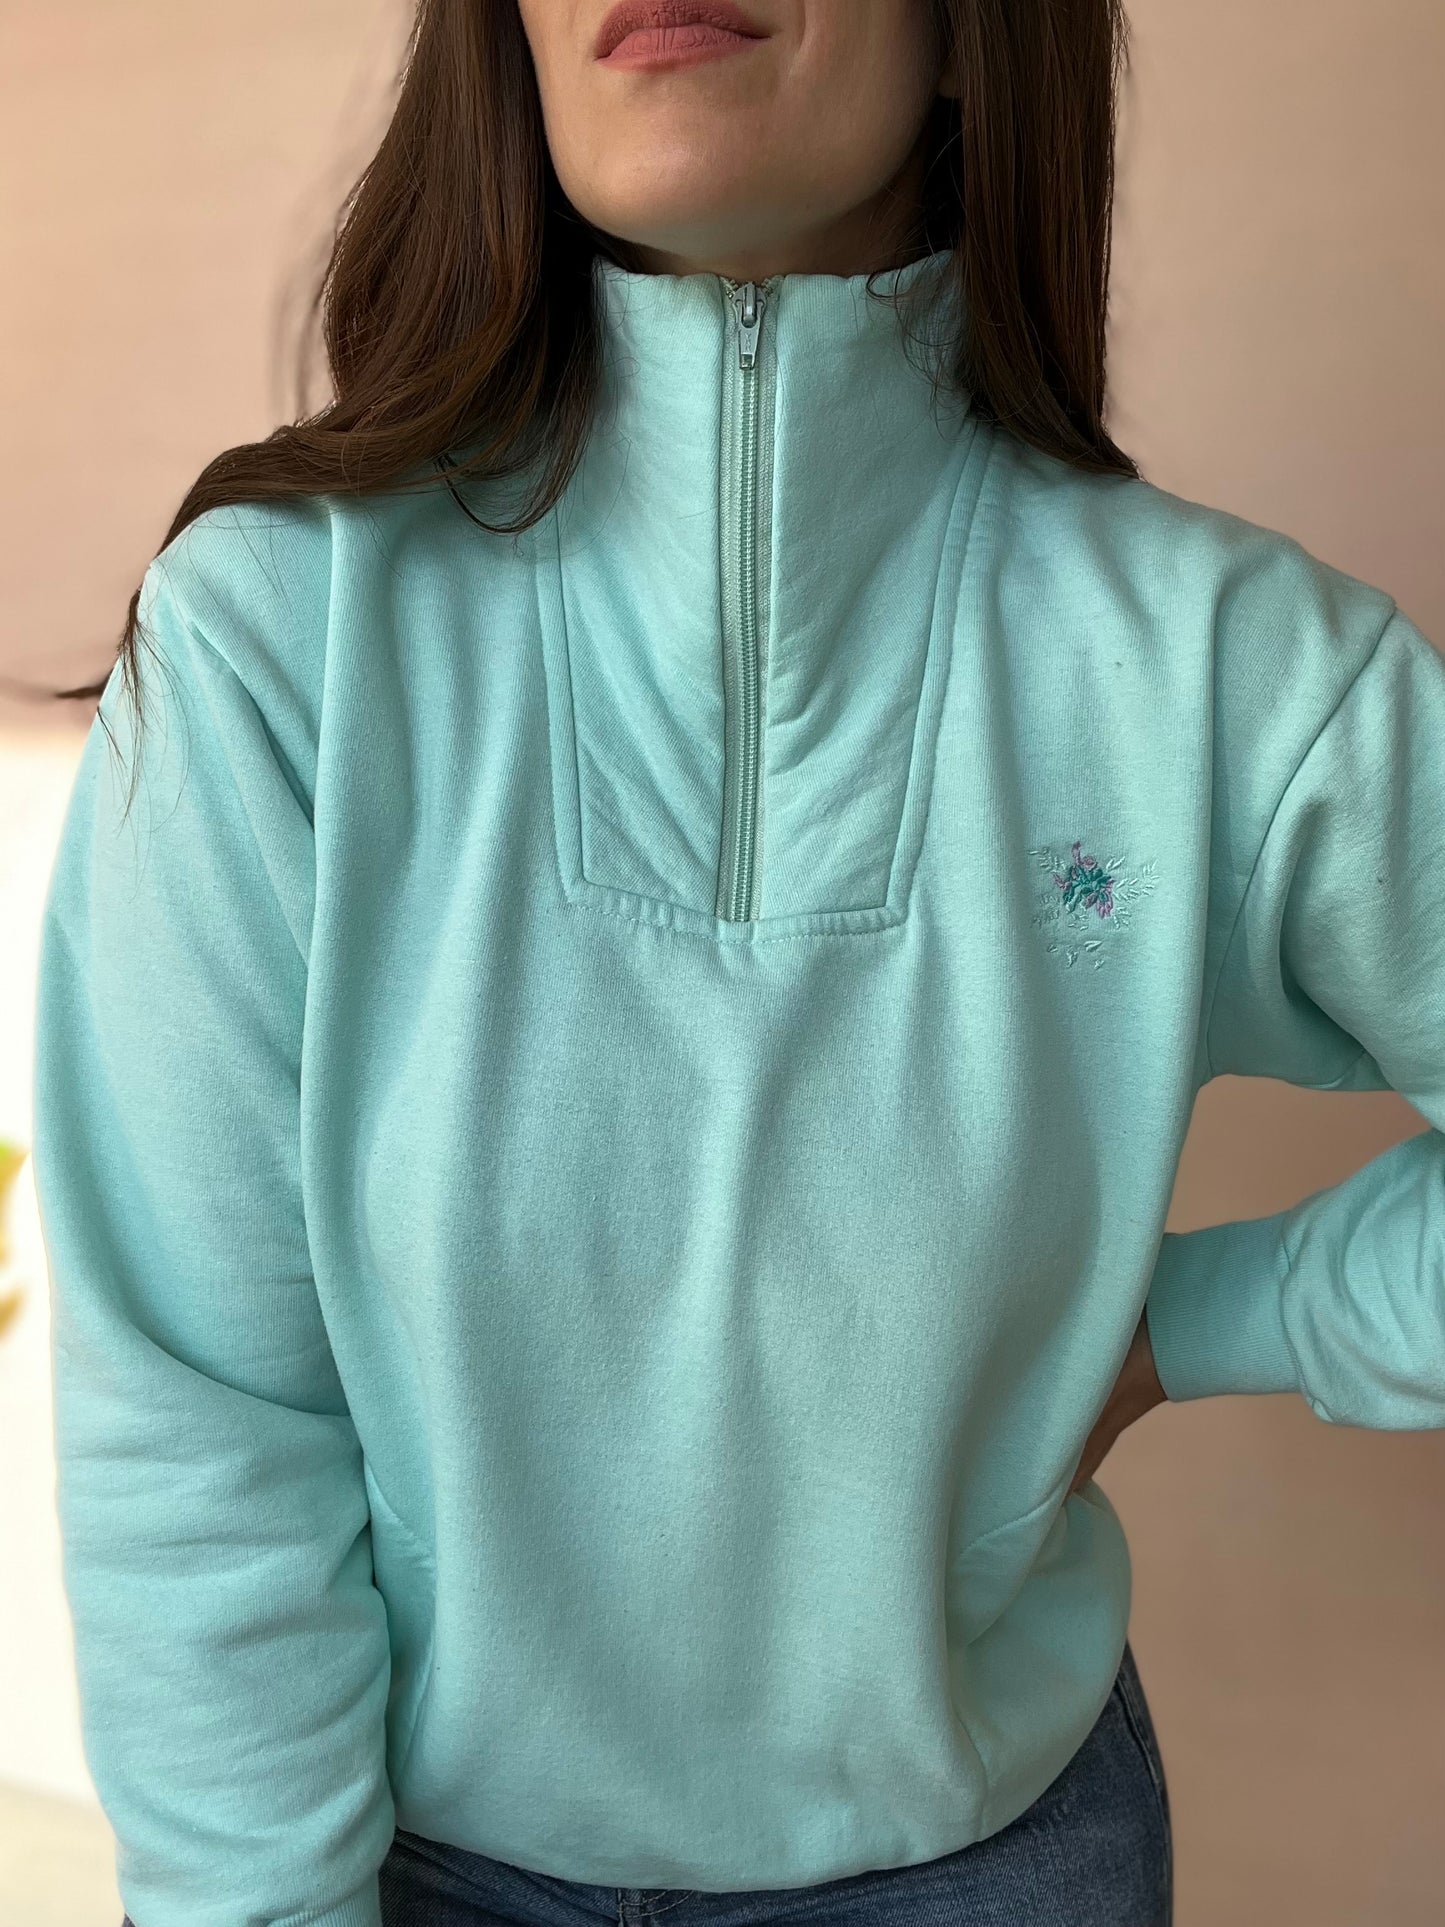 Retro Athletic Mint Sweater - Size M/L